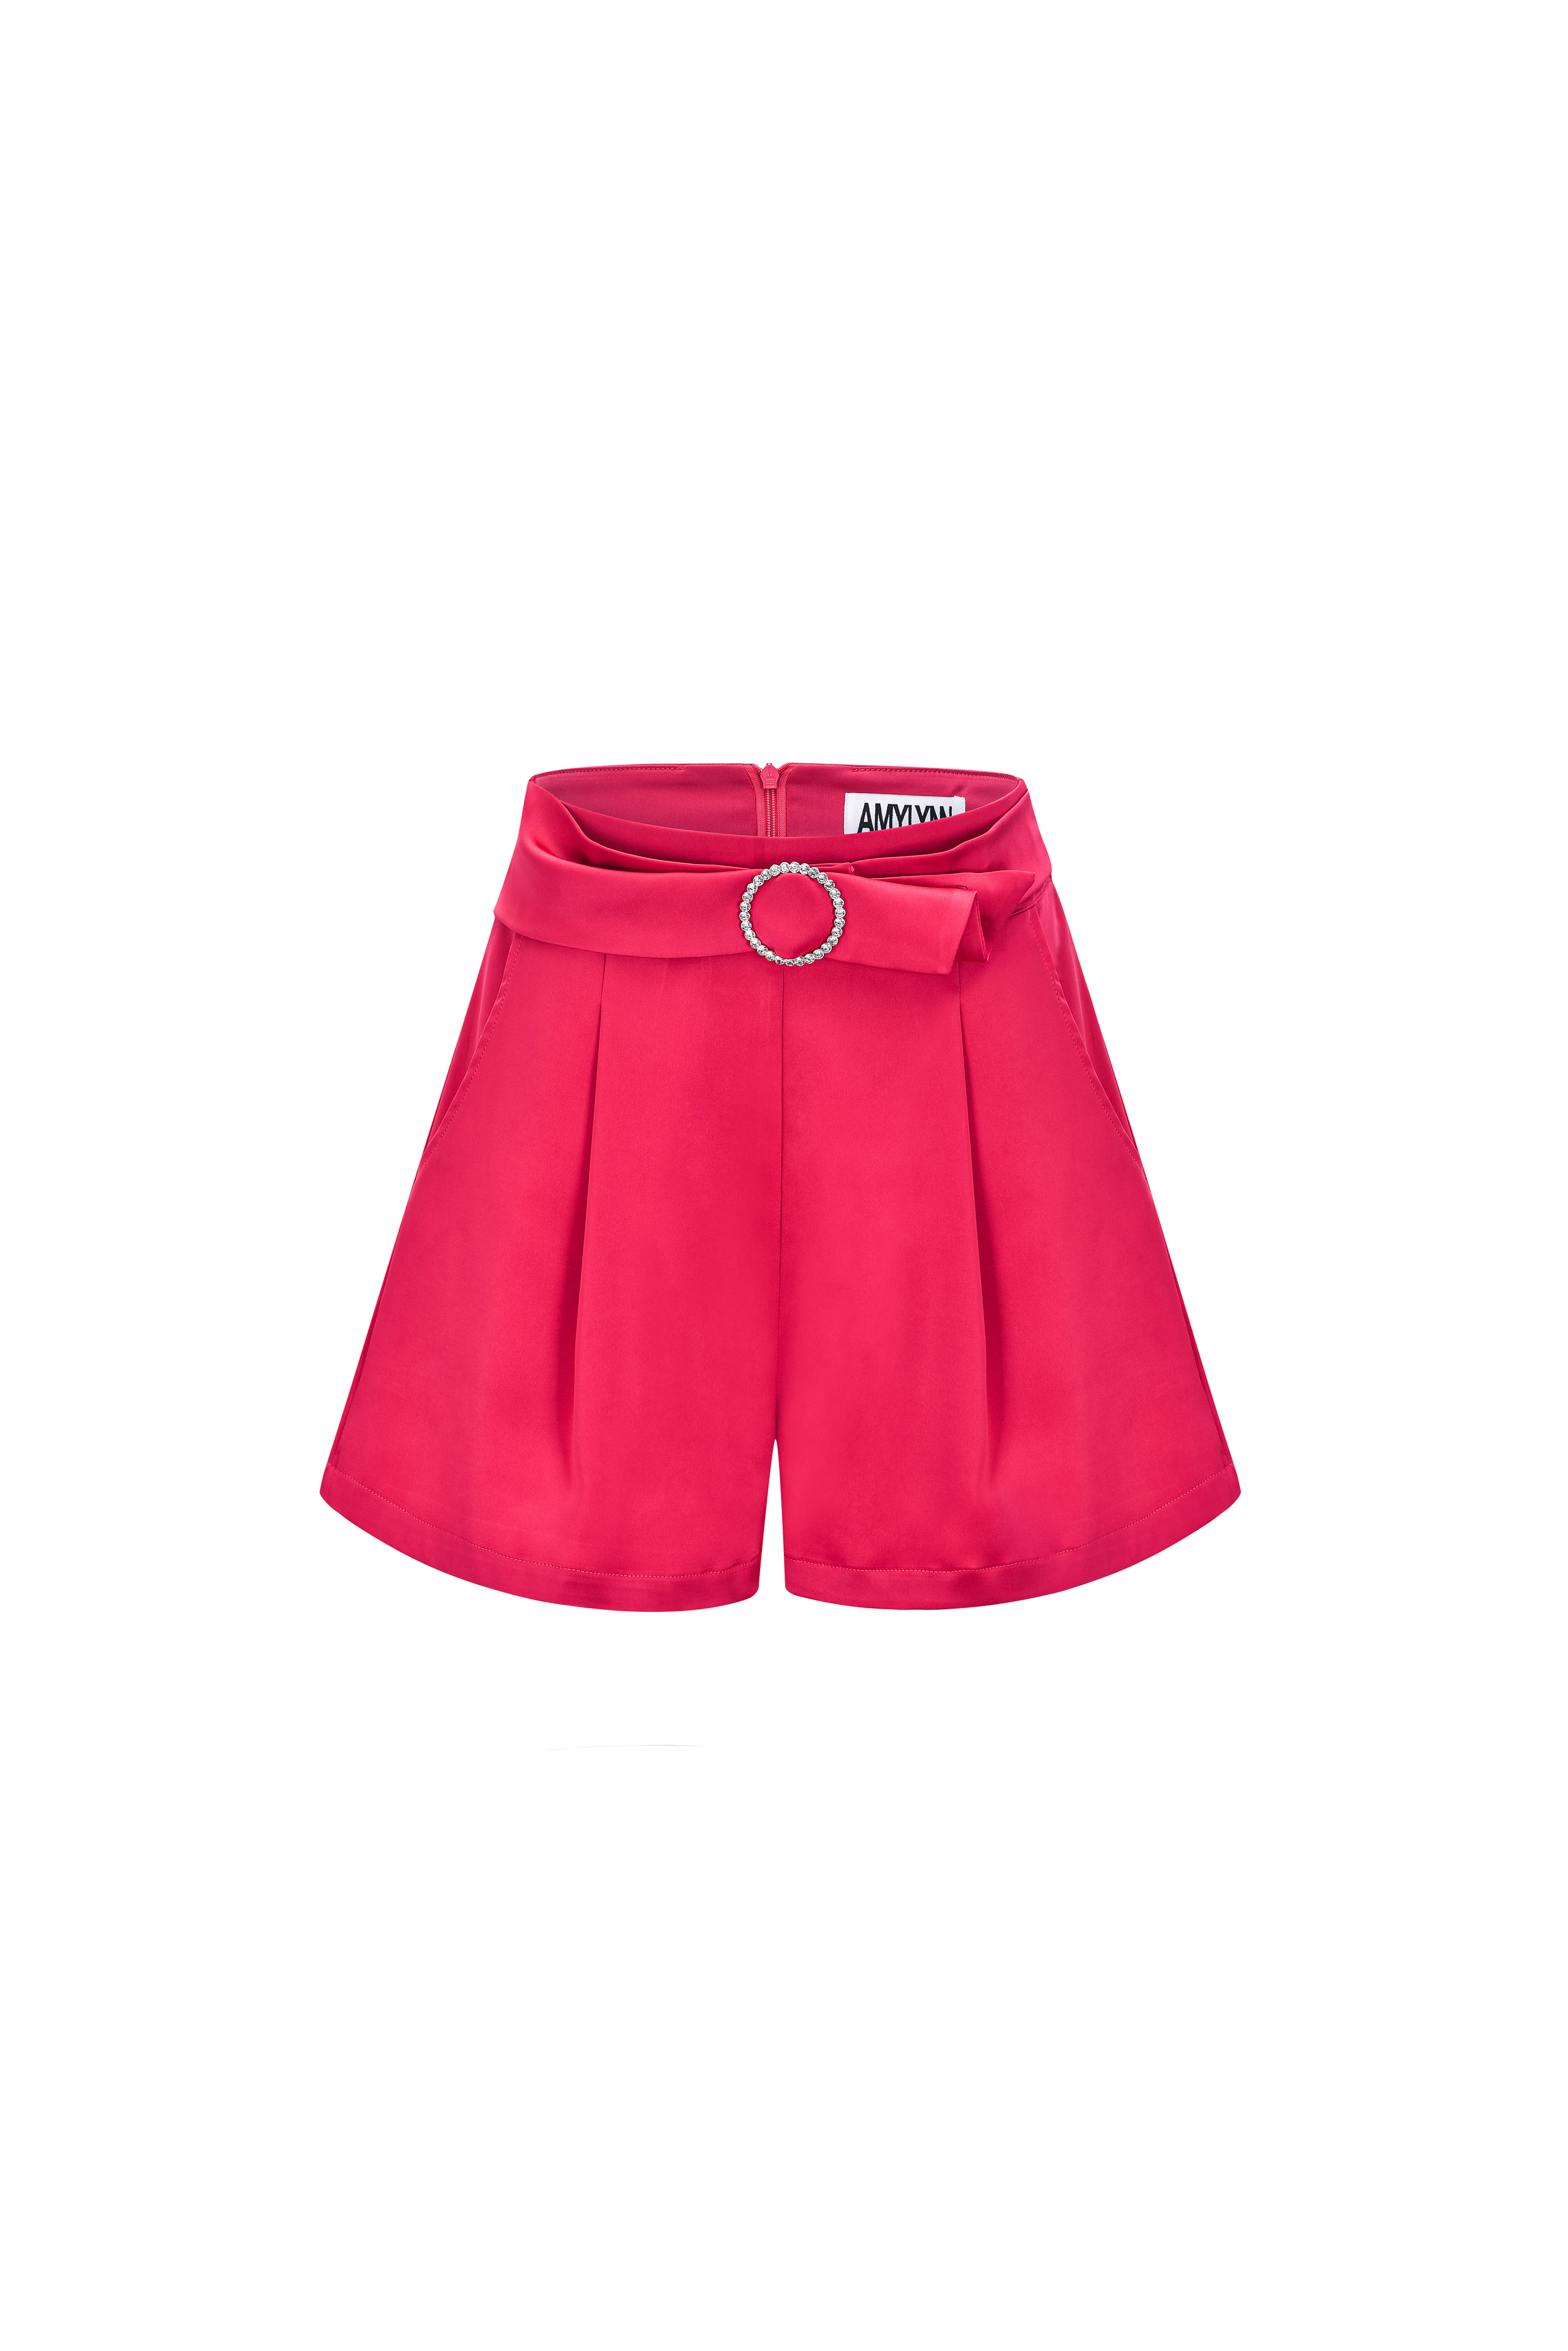 Amy Lynn Women's Pink / Purple Mirabella Pink Satin Shorts